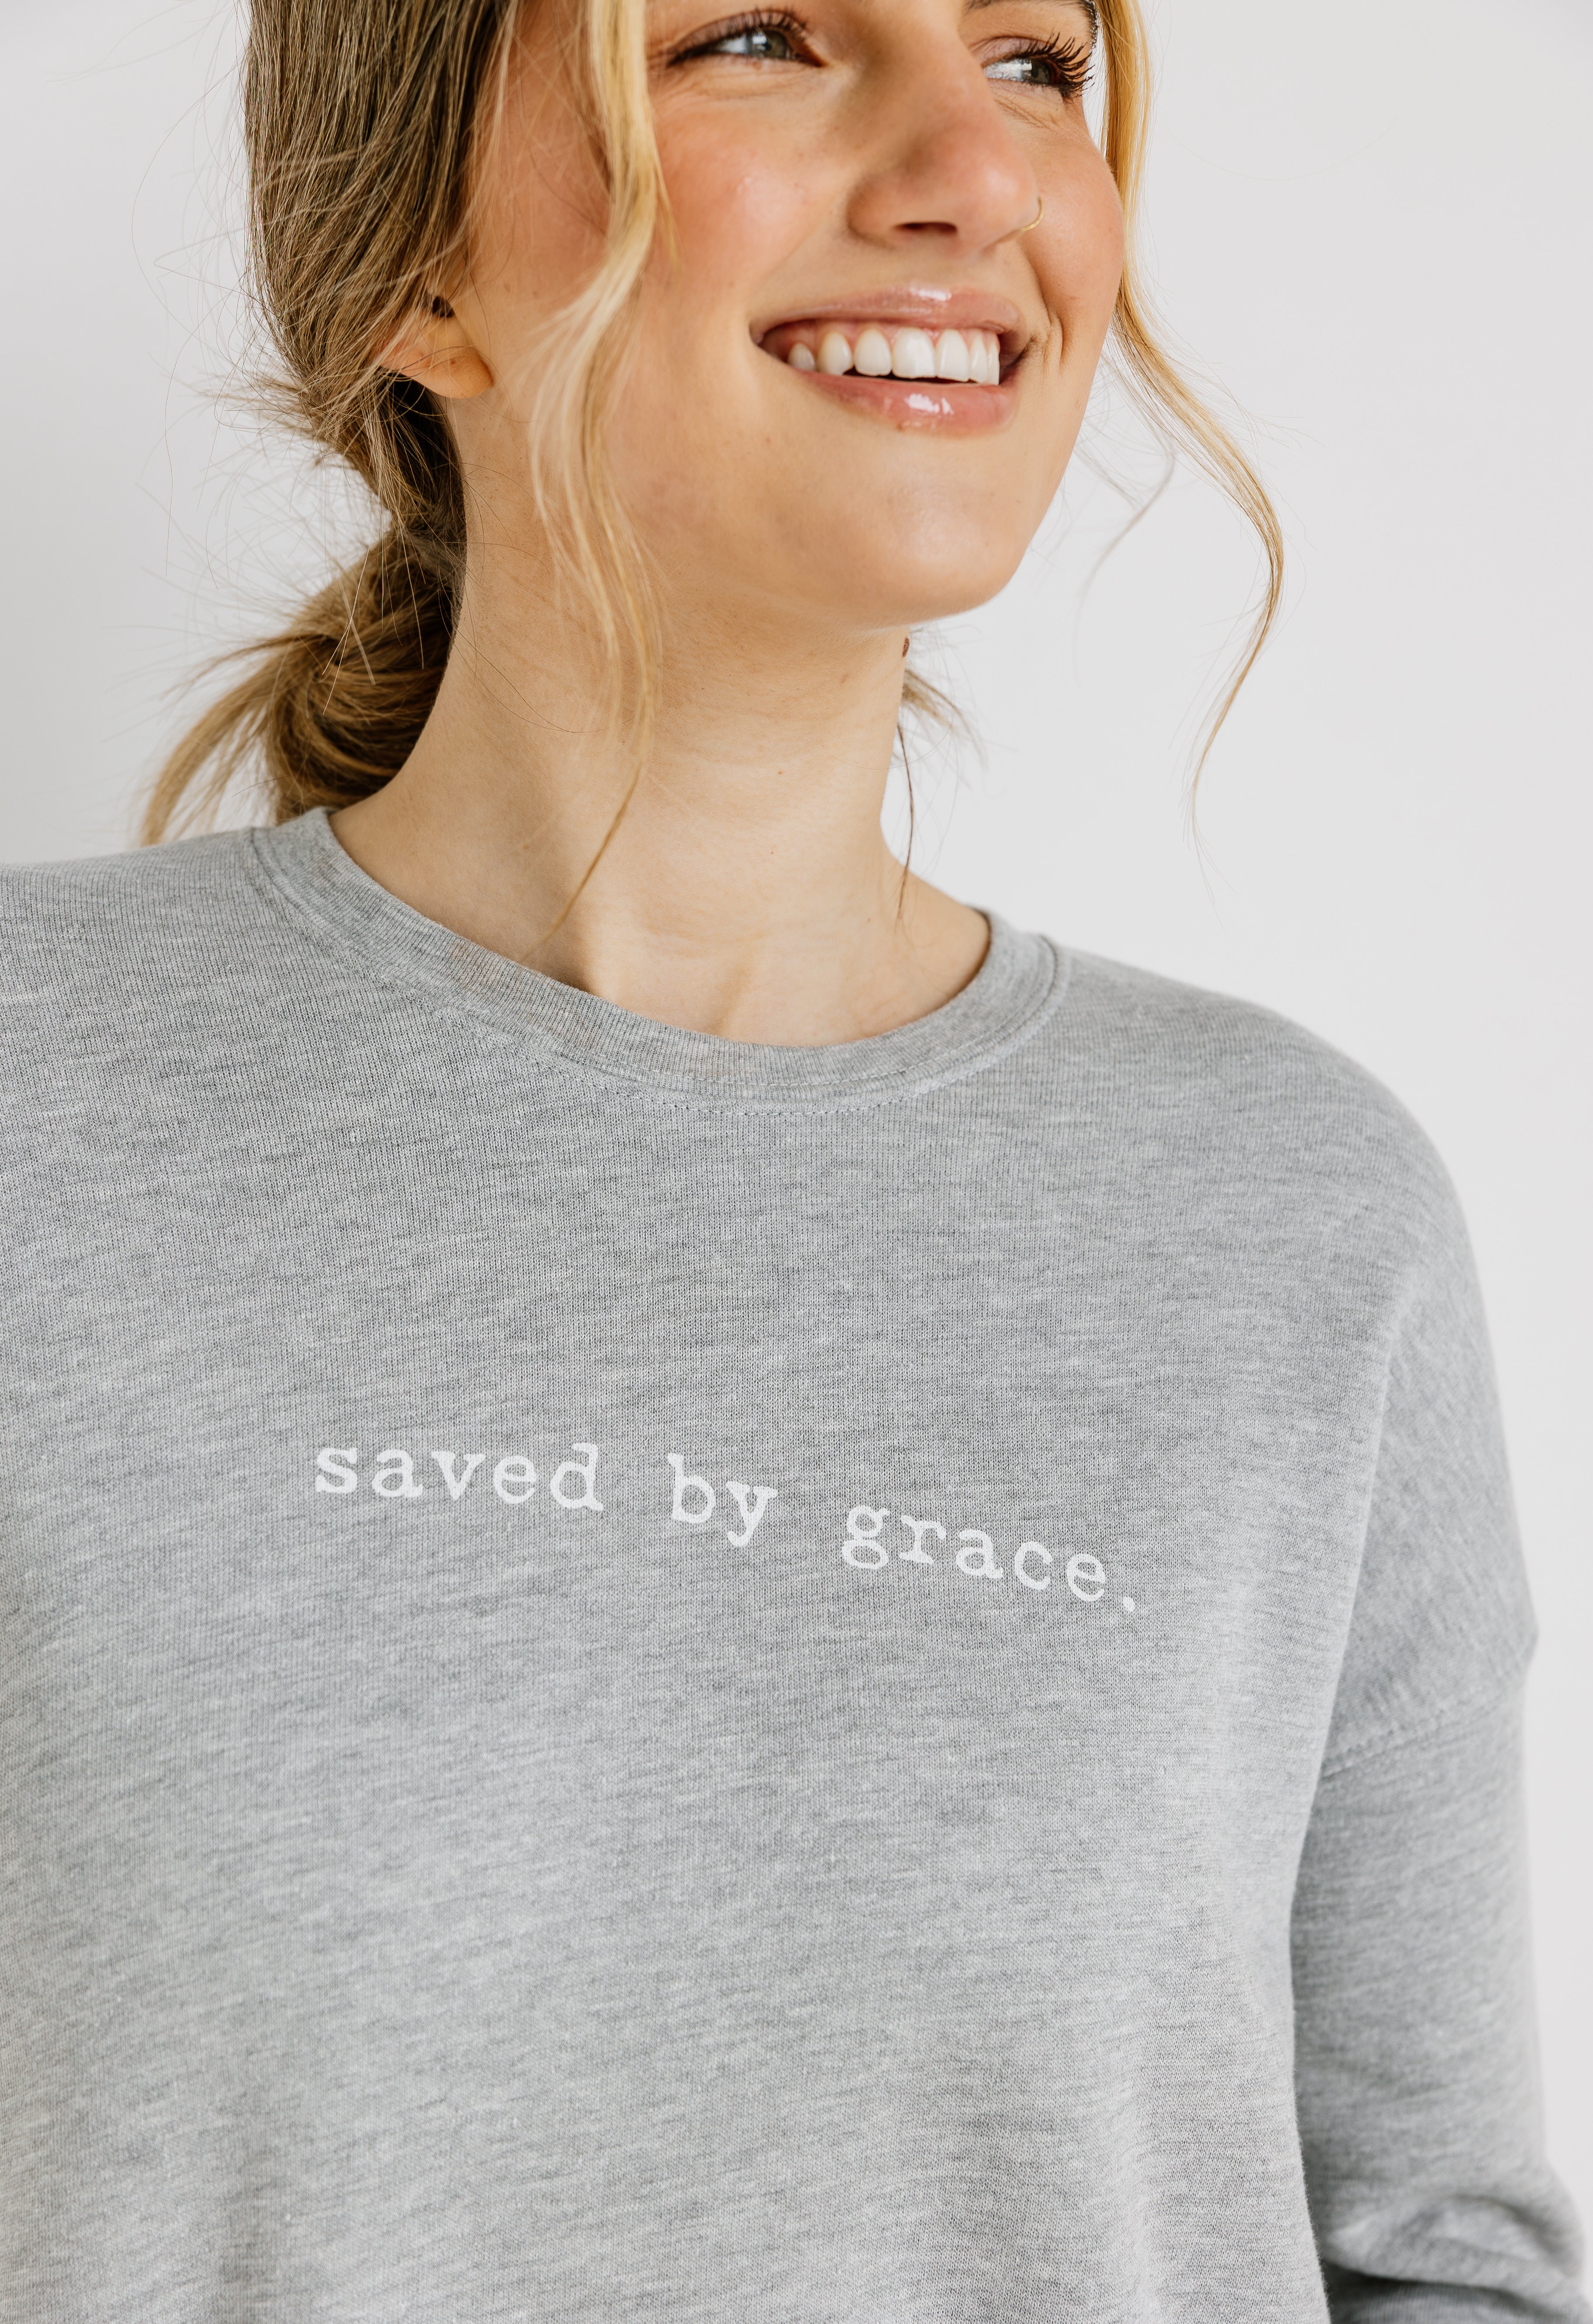 Saved By Grace Sweatshirt - ATHLETIC HEATHER - willows clothing SWEATSHIRT